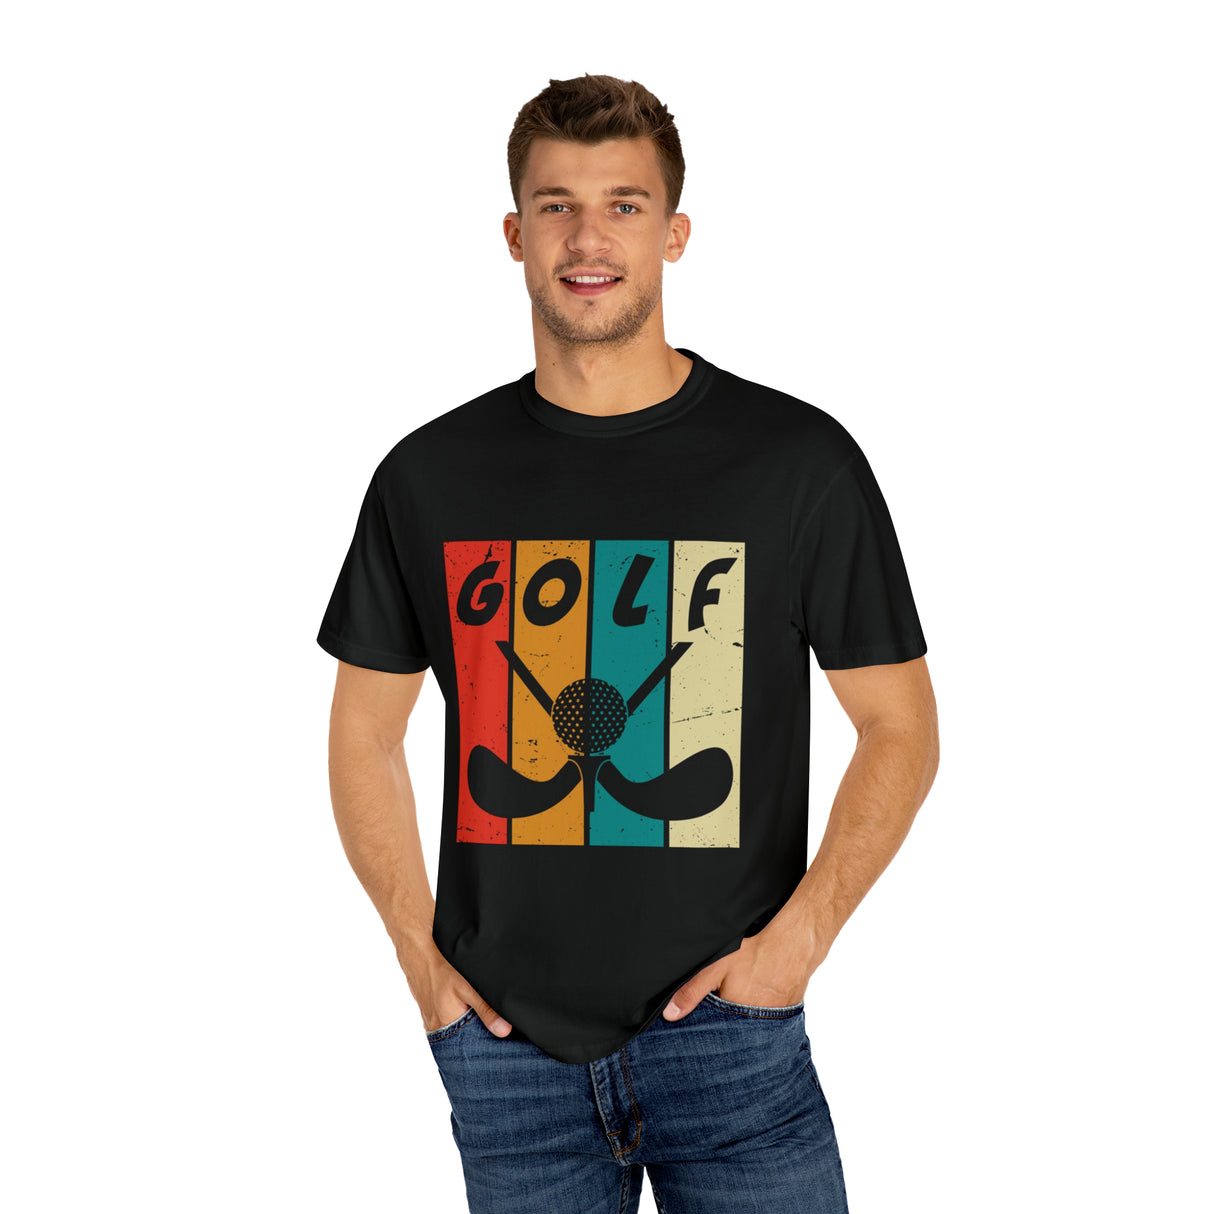 GOLF BOARD Garment-Dyed T-shirt